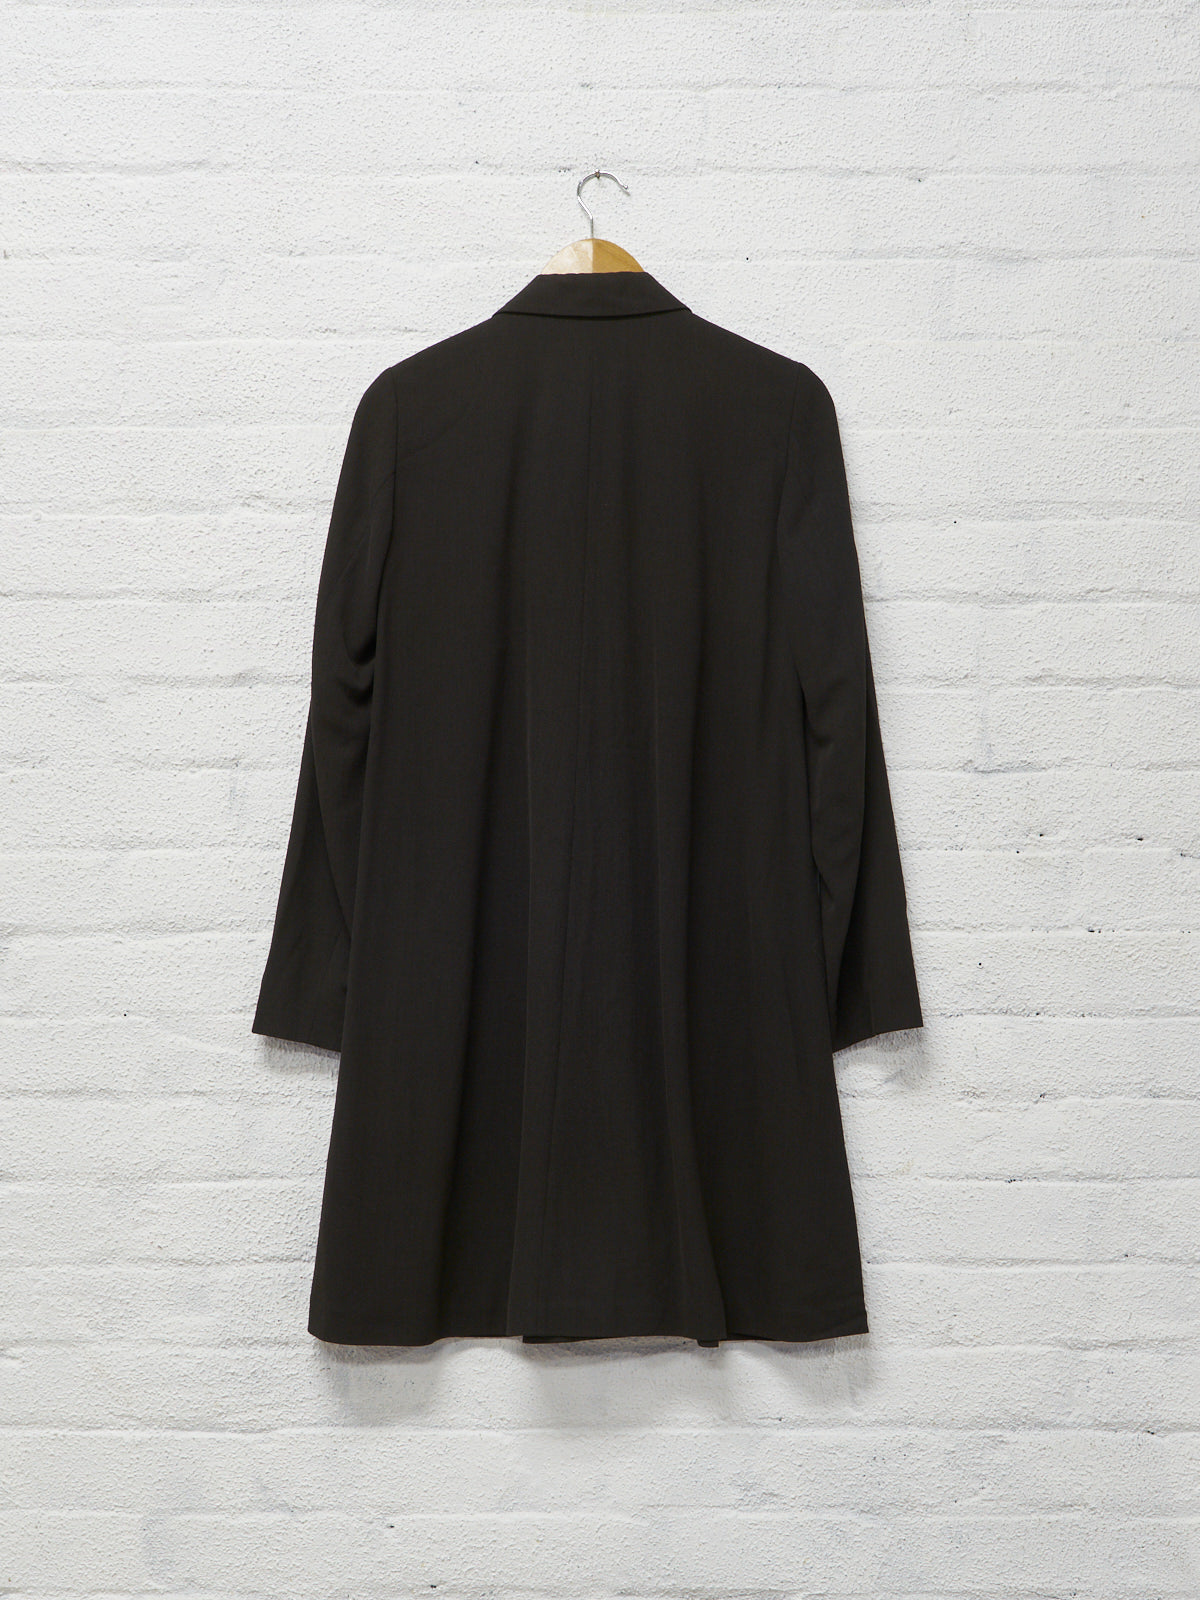 Dries Van Noten brown wool rayon covered zip coat - womens 36